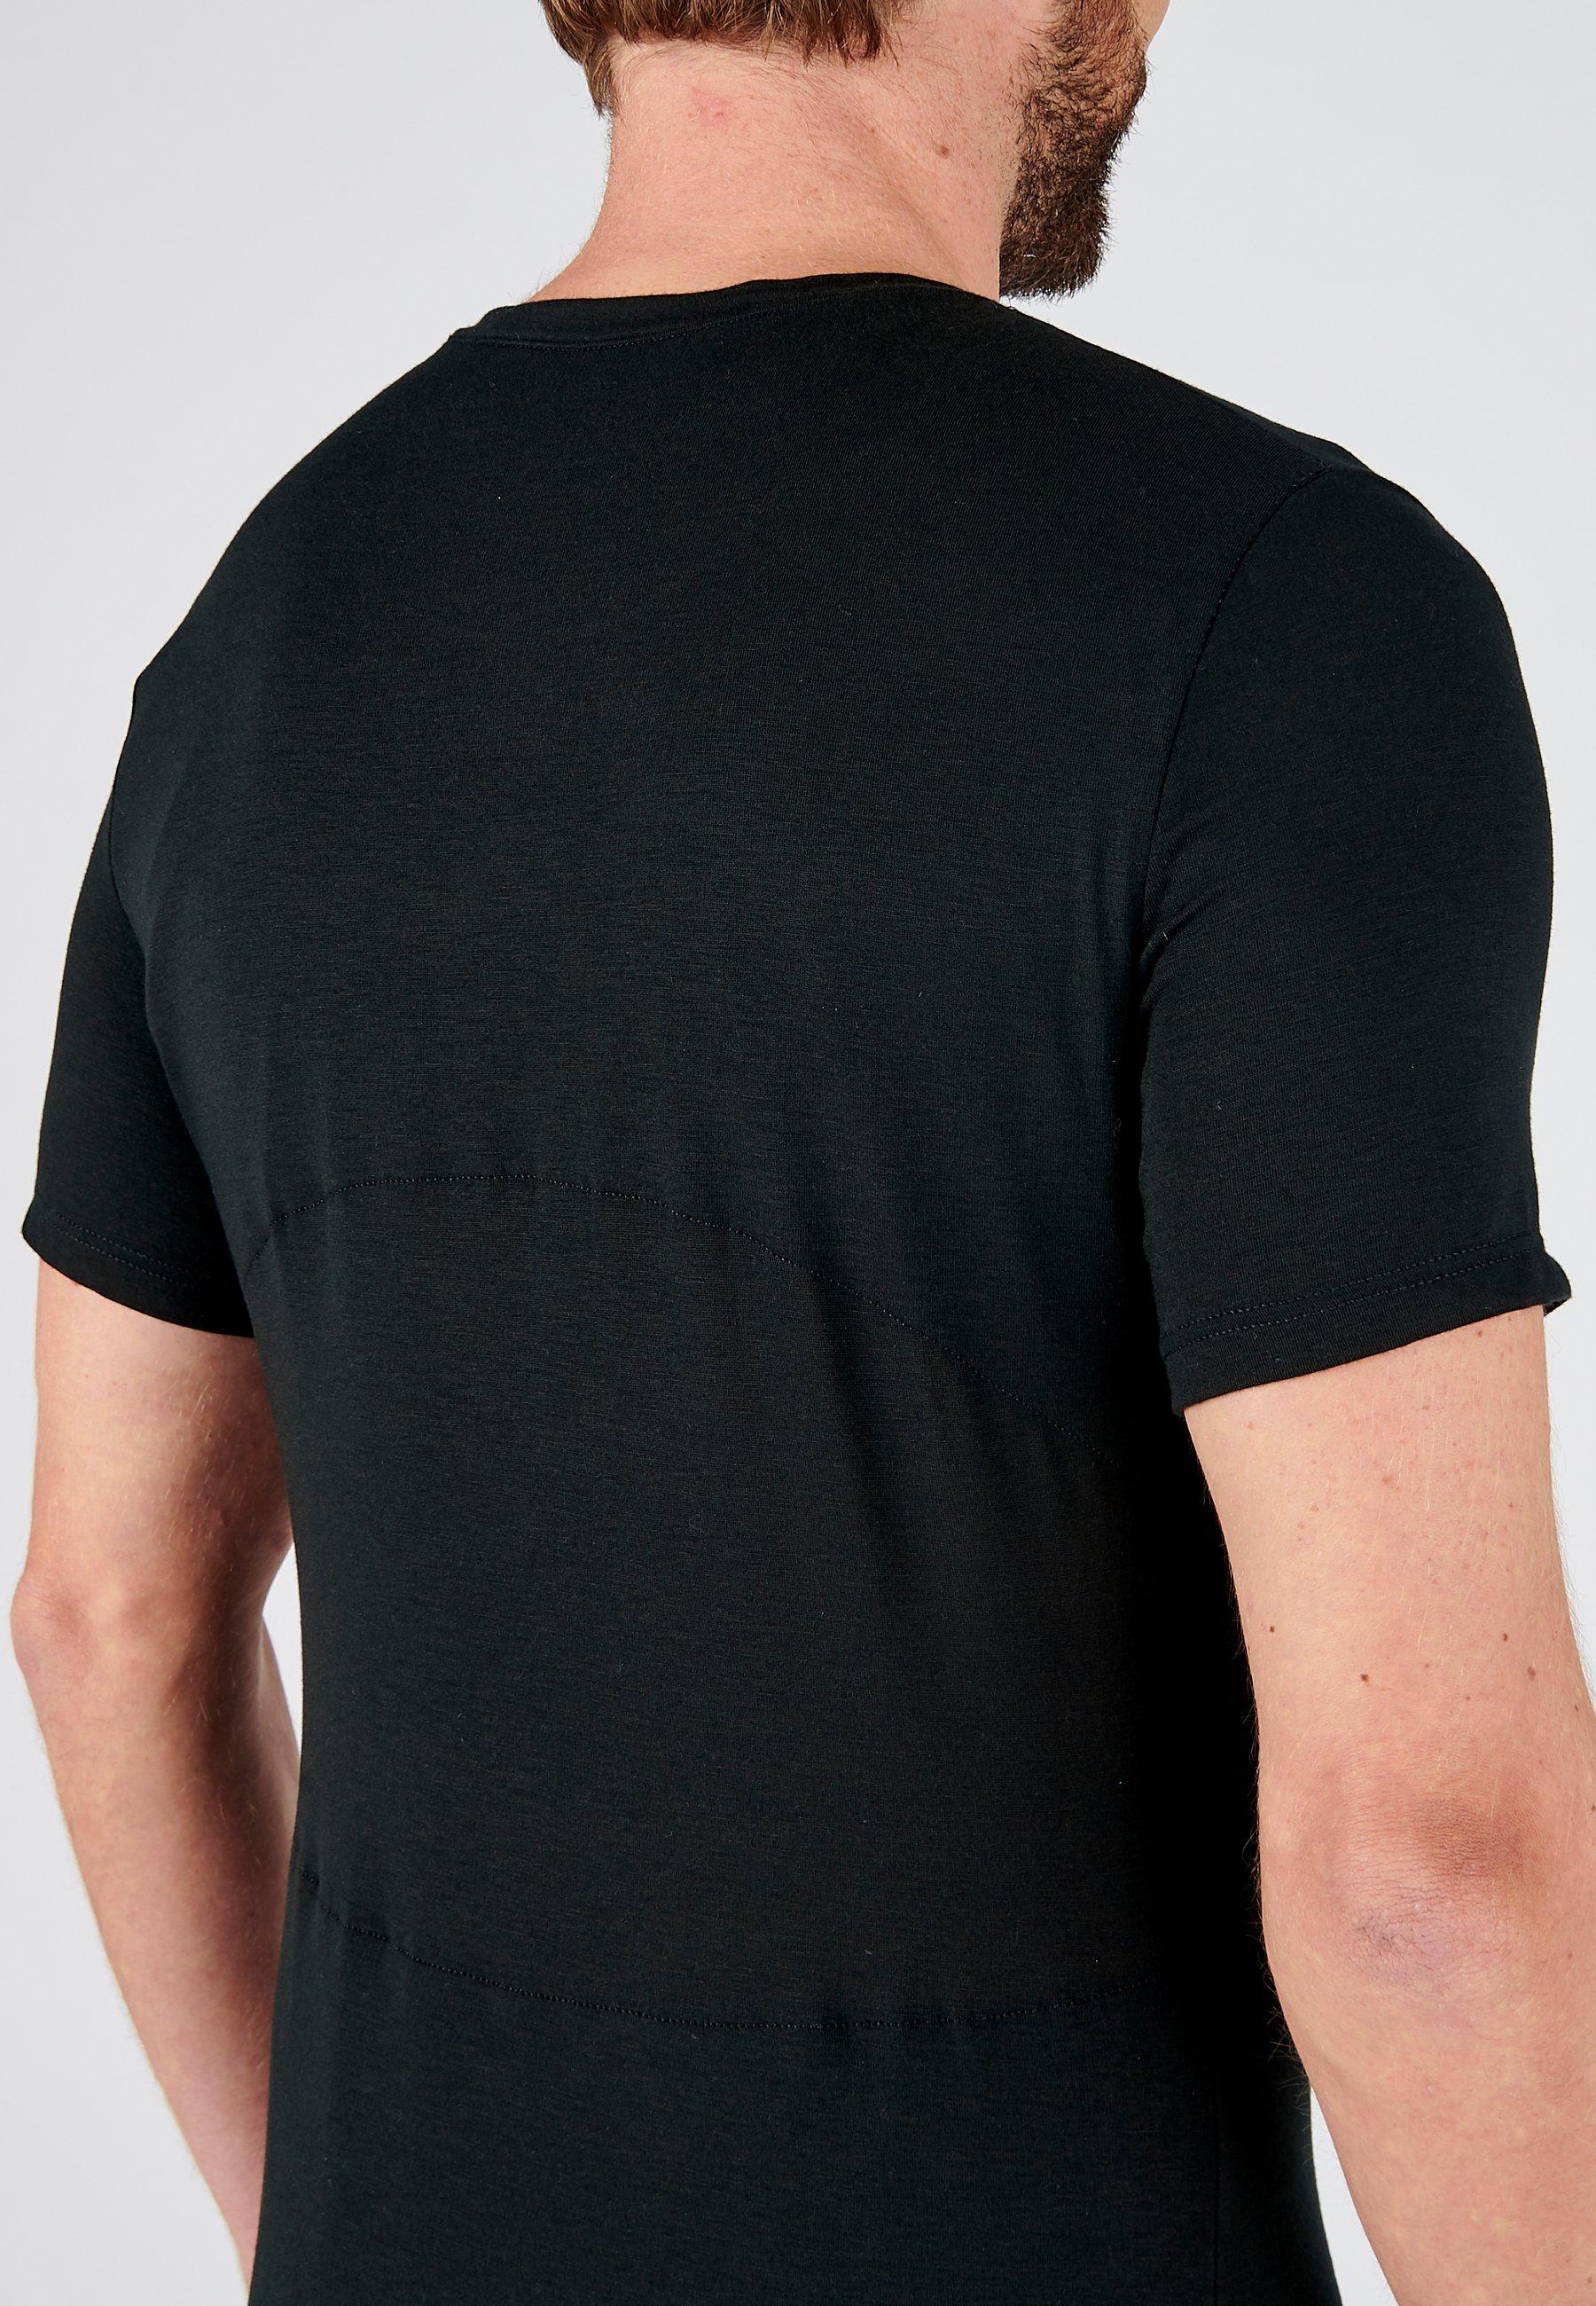 Damart  Tee-shirt manches courtes en microfibre Thermolactyl, chaleur Soft 2. 